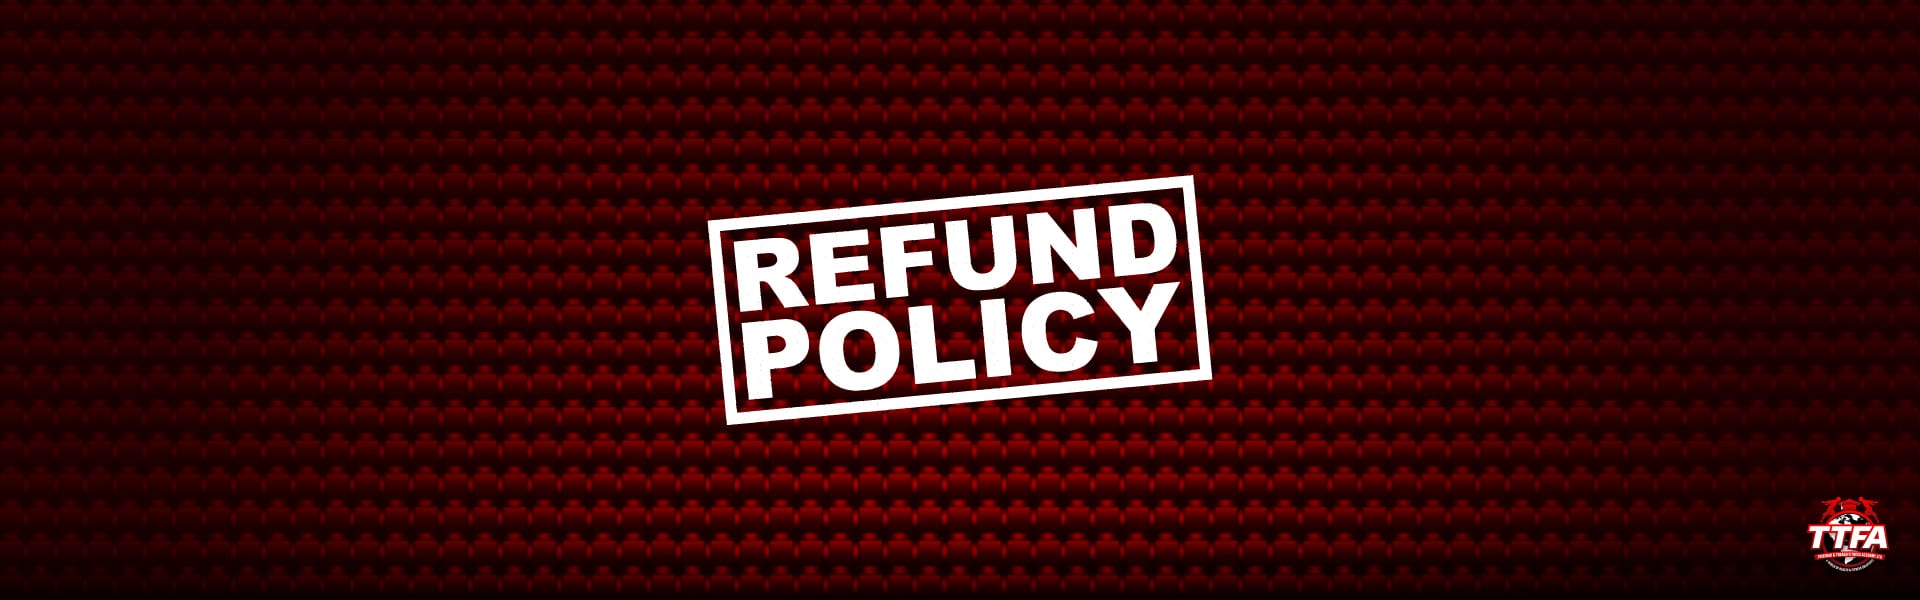 Refund-Policy-2